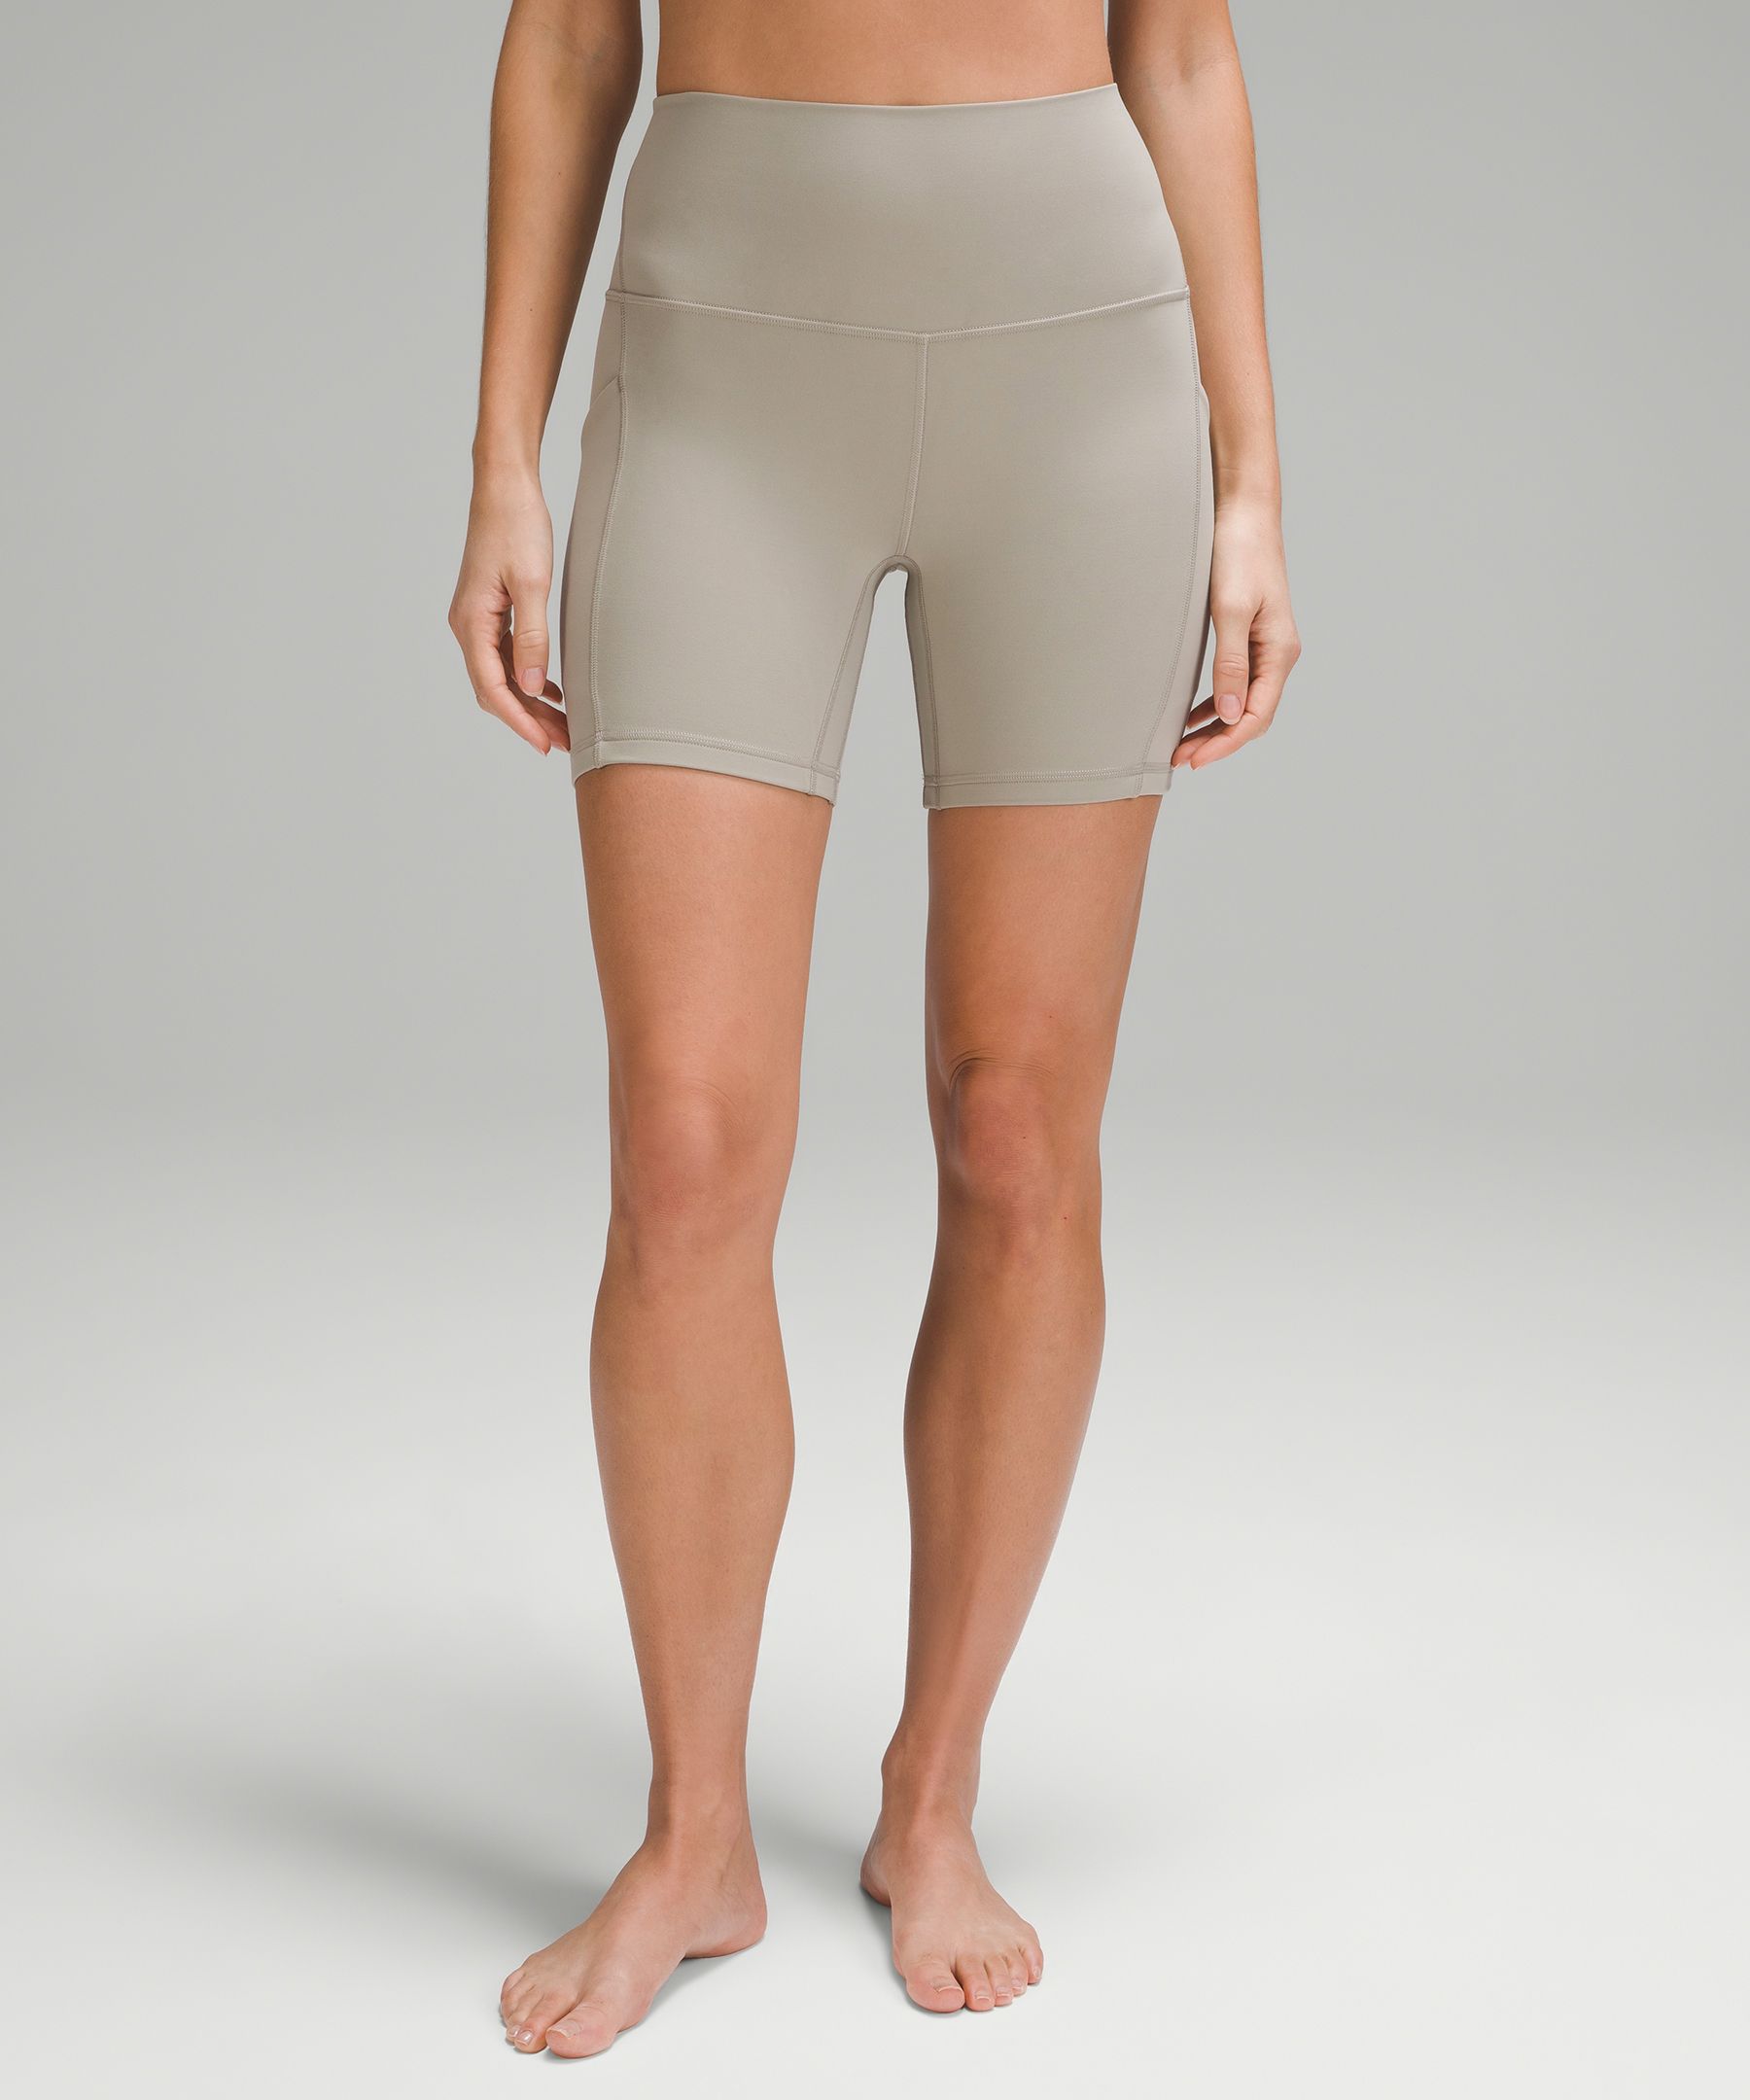 Lululemon Align™ High-Rise Short with Pockets 6, Women's Shorts